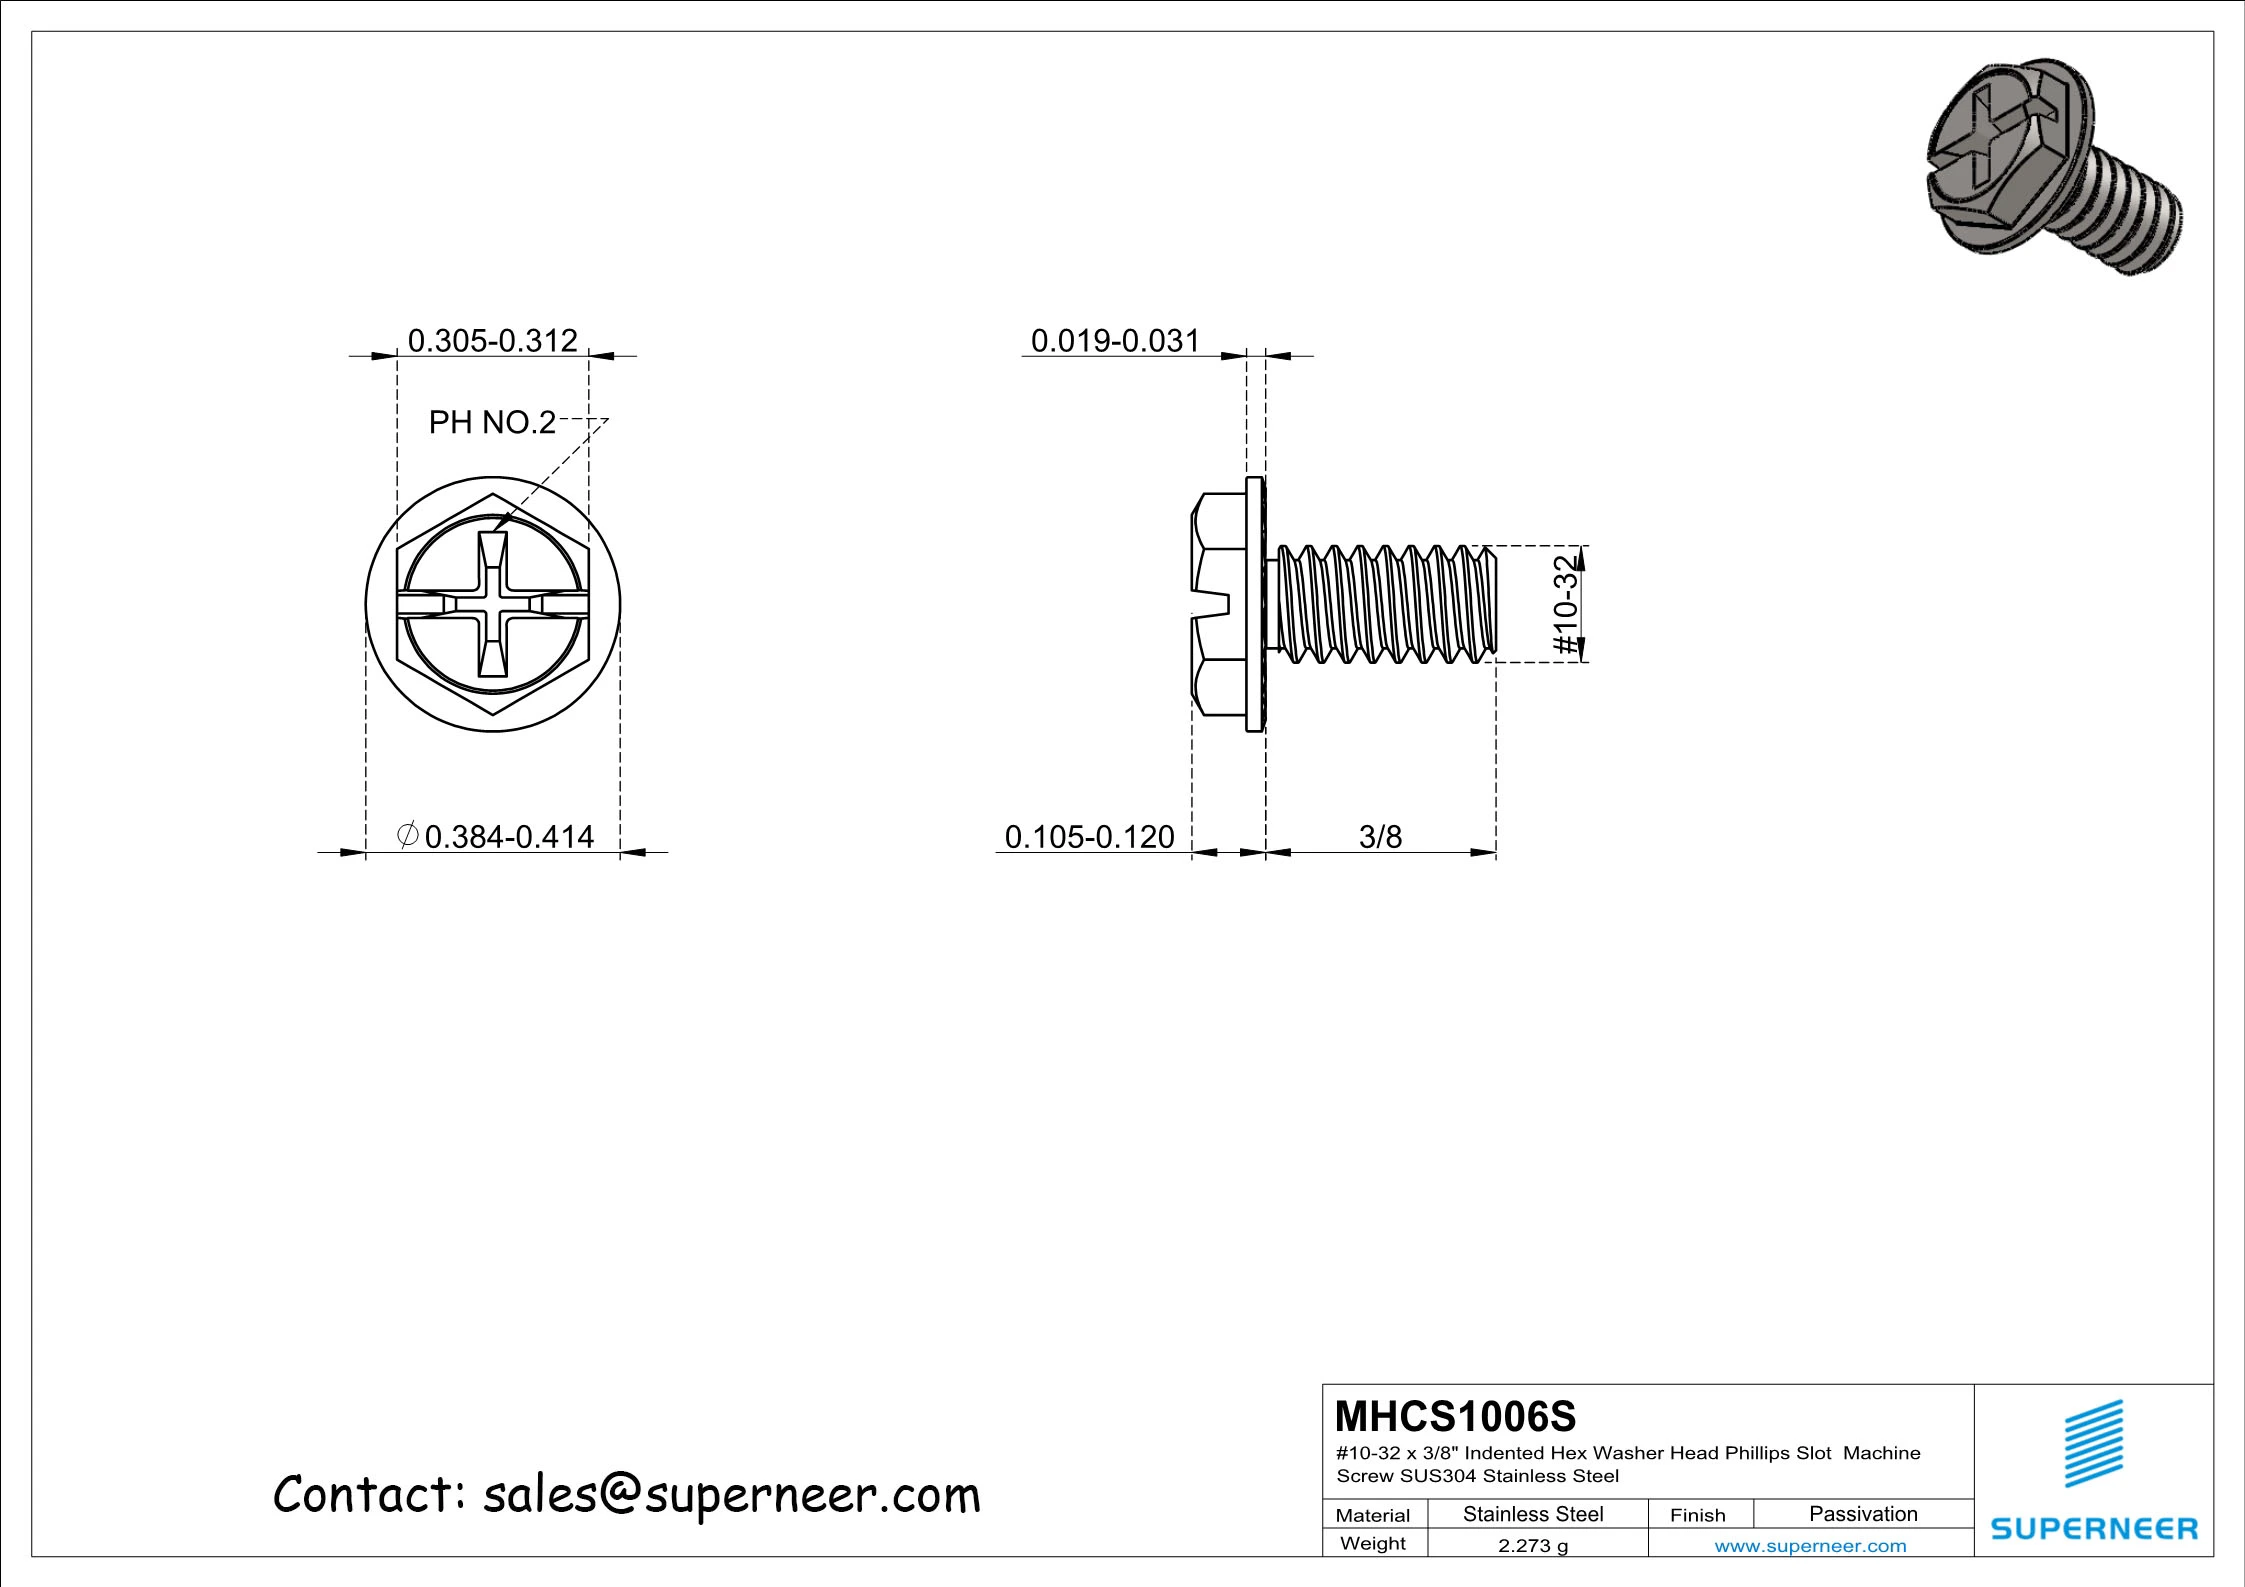 10-32 x 3/8" Indented Hex Washer Serrated Head Phillips Slot Machine Screw SUS304 Stainless Steel Inox